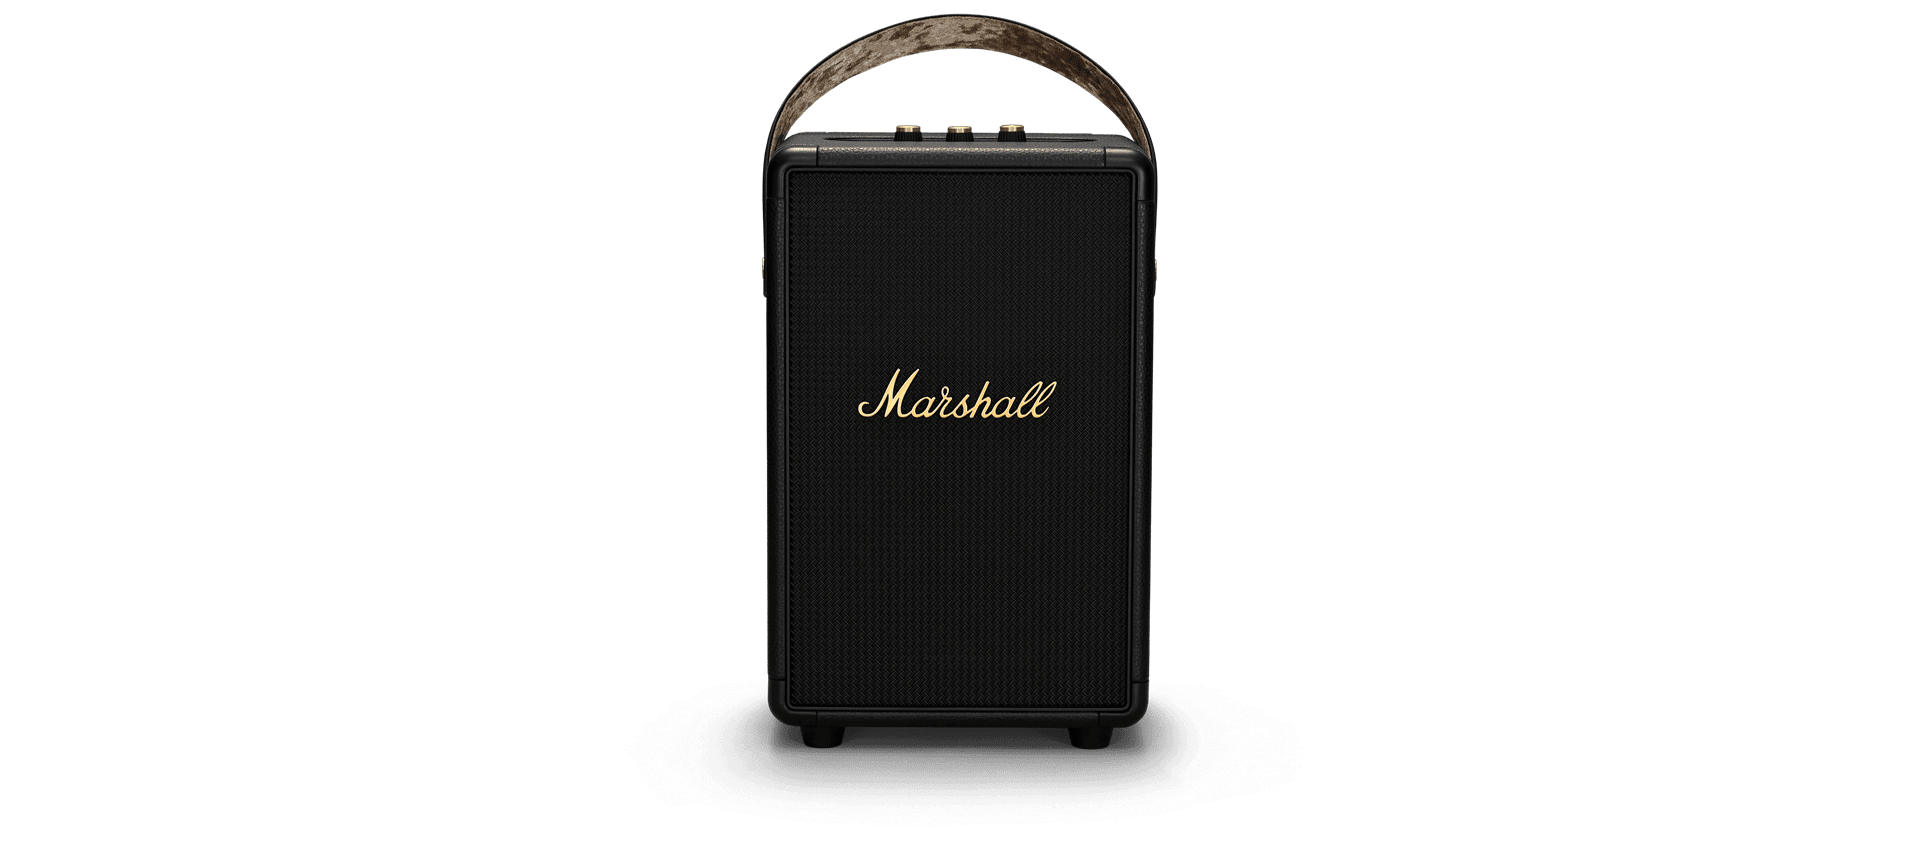 MARSHALL_TUFTON_1